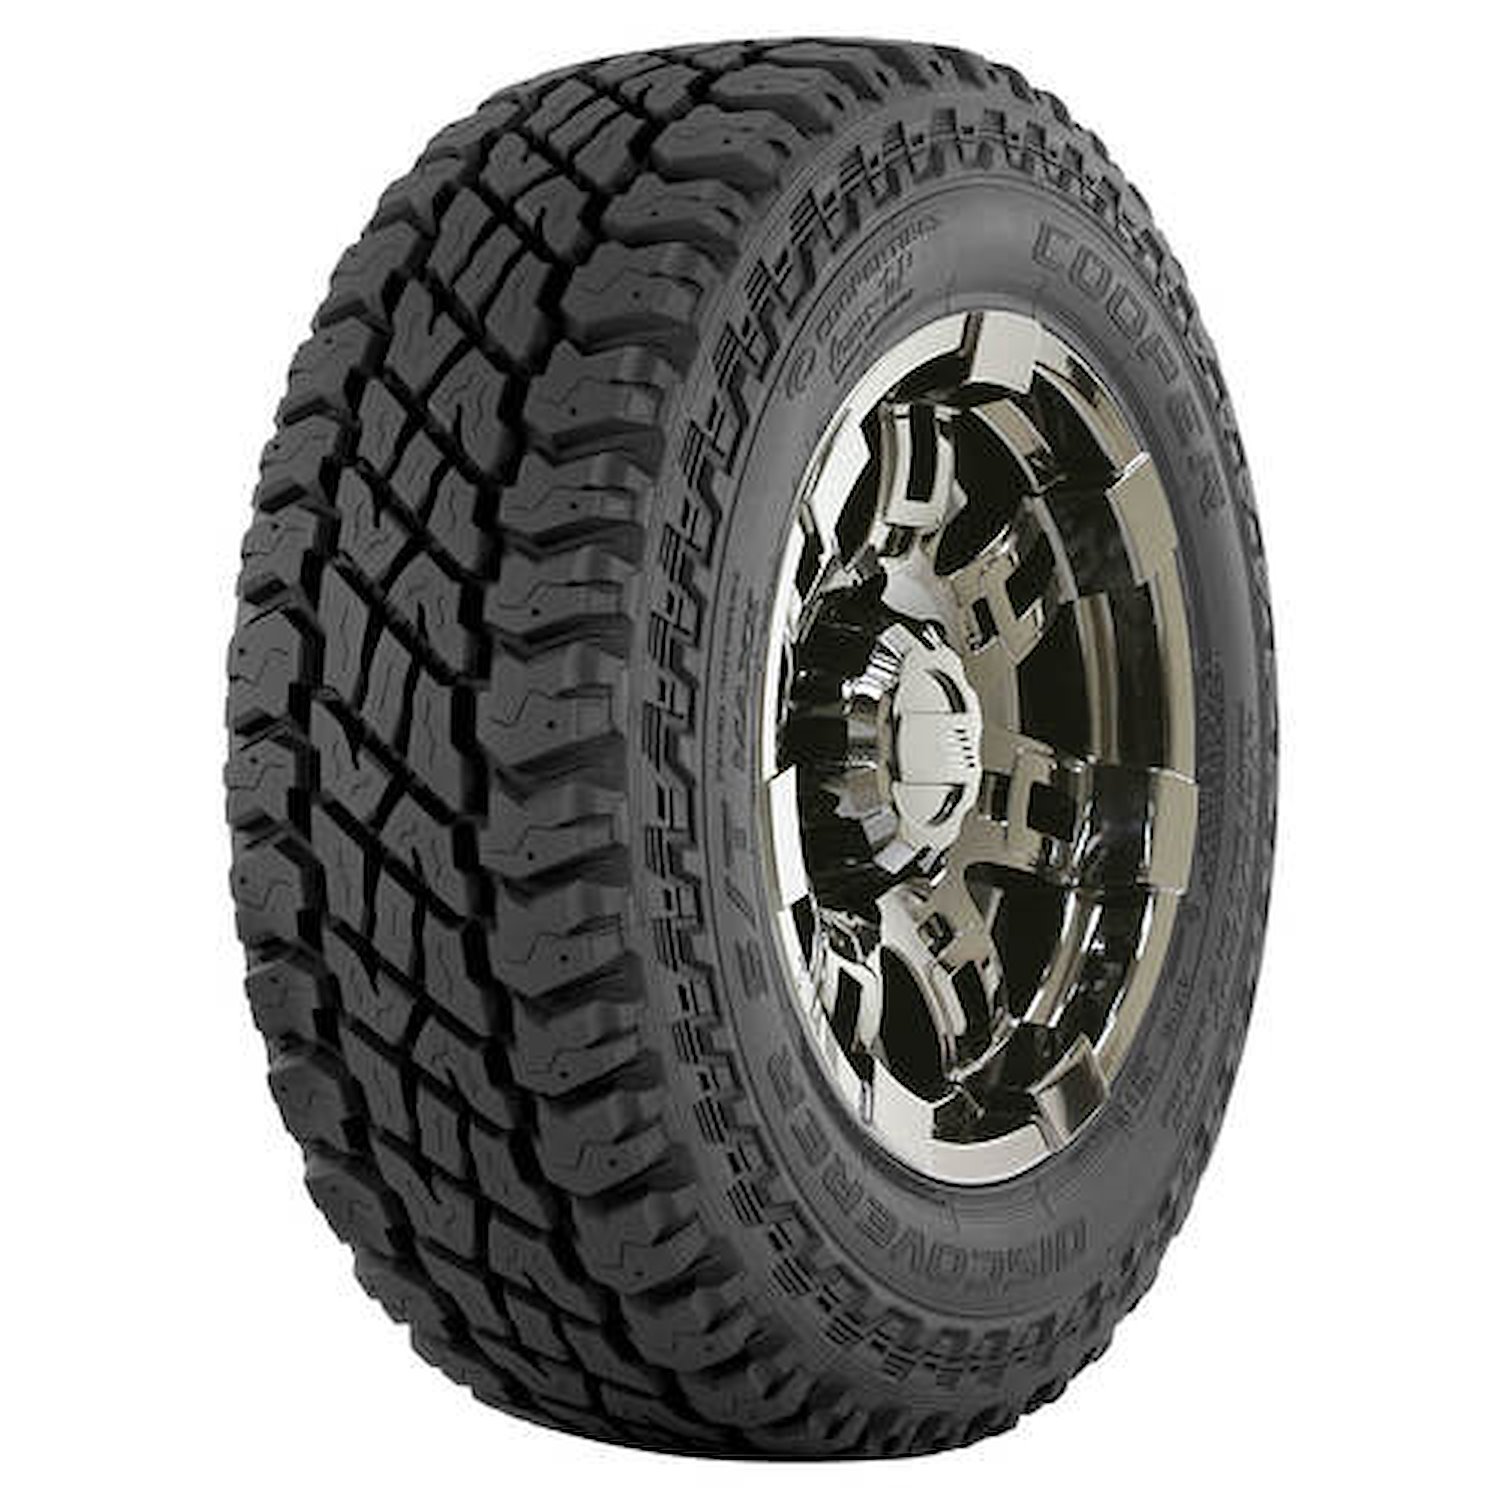 Discoverer S/T Maxx All-Terrain Tire, LT315/70R17